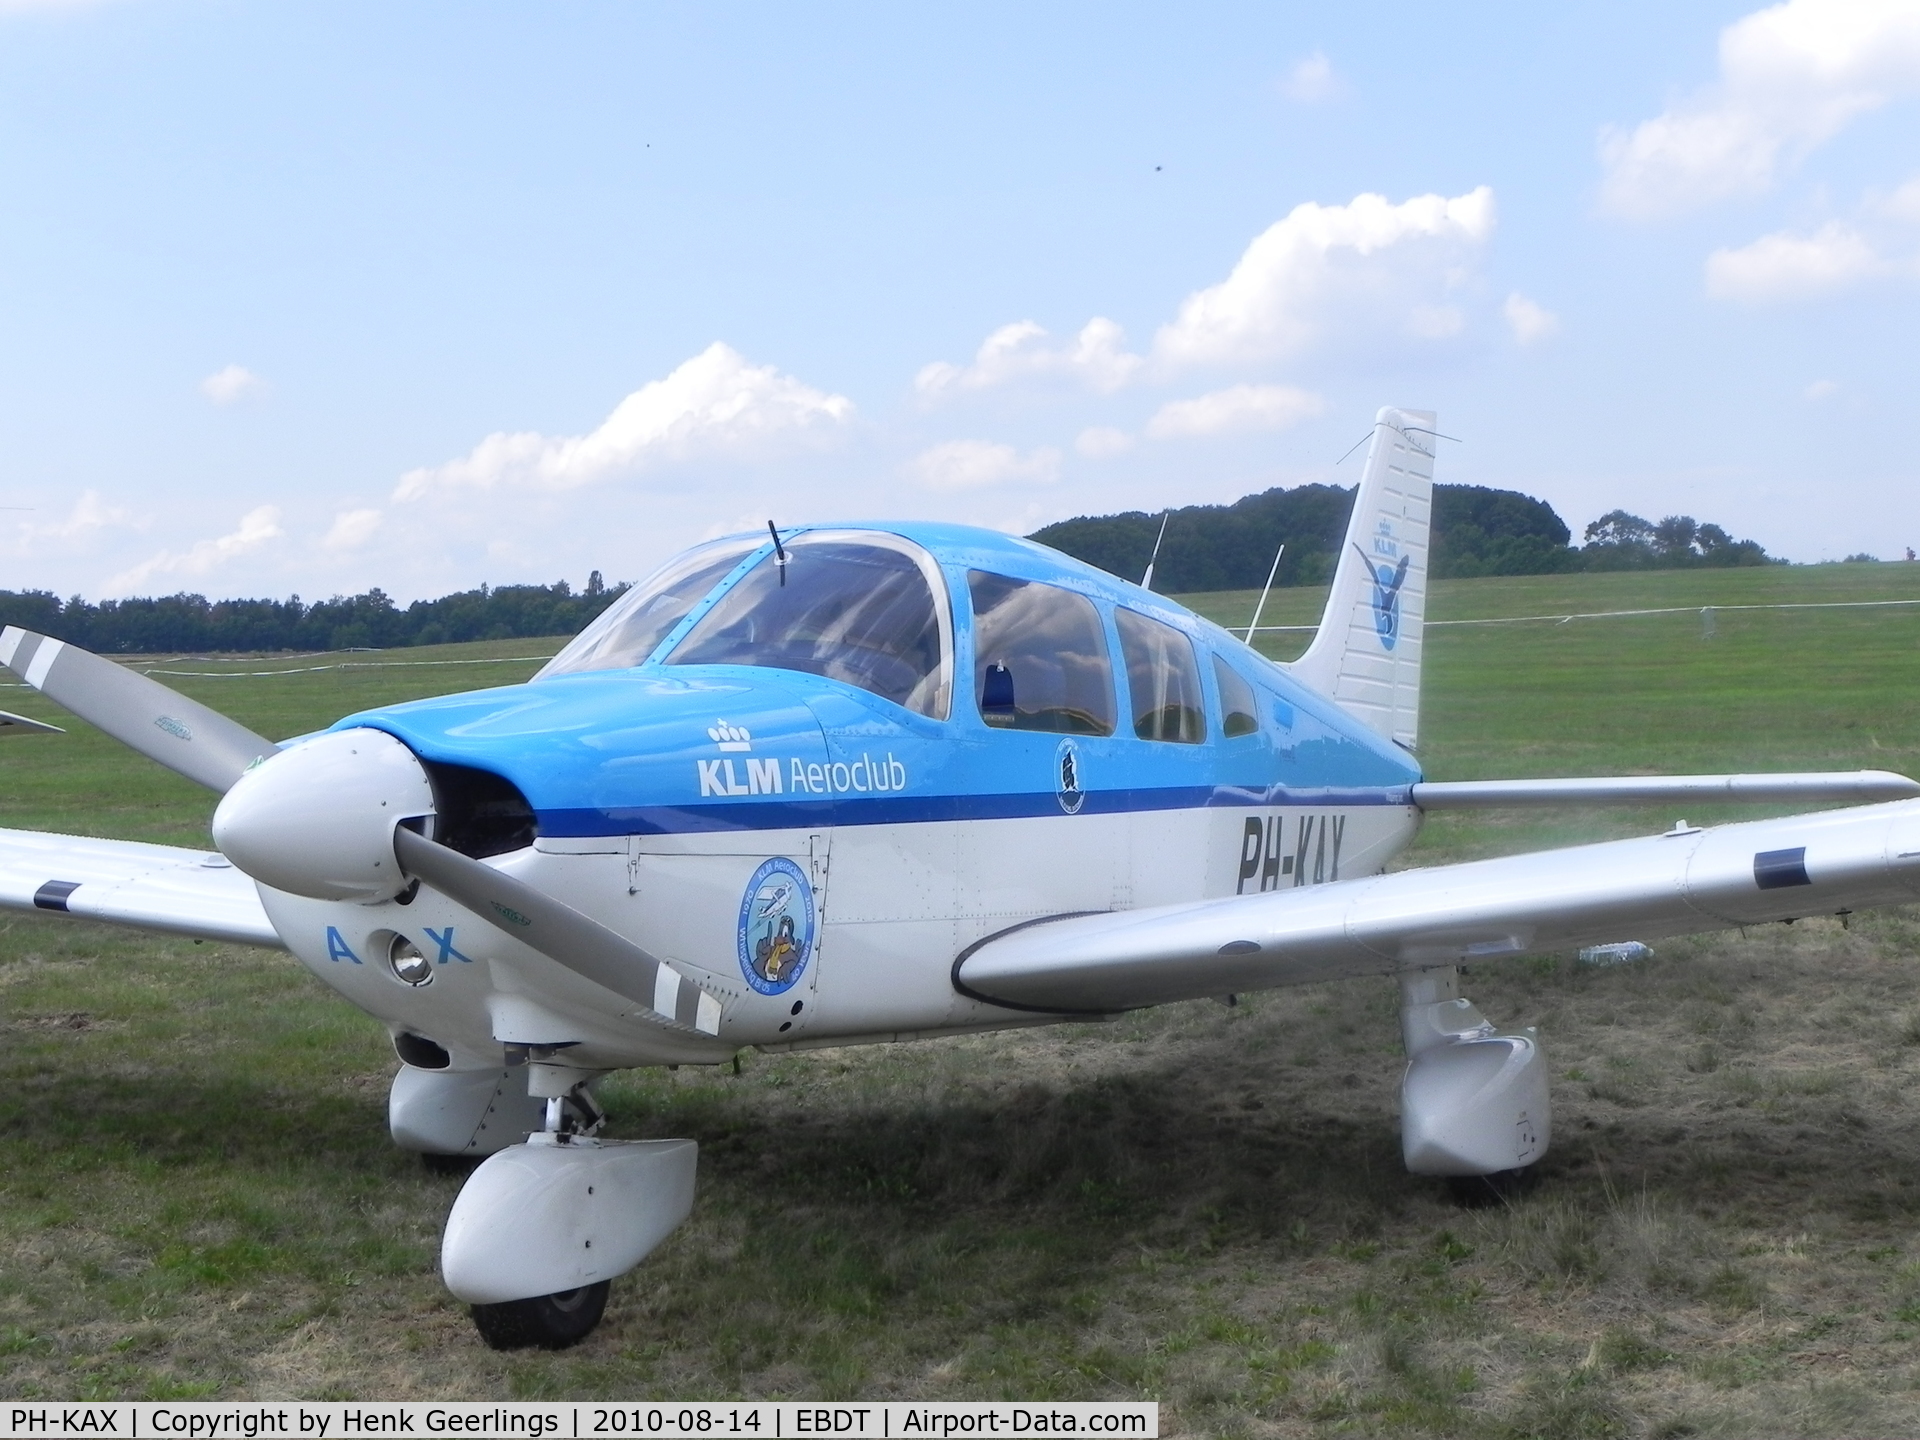 PH-KAX, 1986 Piper PA-28-181 Archer C/N 2890001, Schaffen - Diest , Belgium. Oldtimer Fly- In August 2010 

New sticker on the nose.